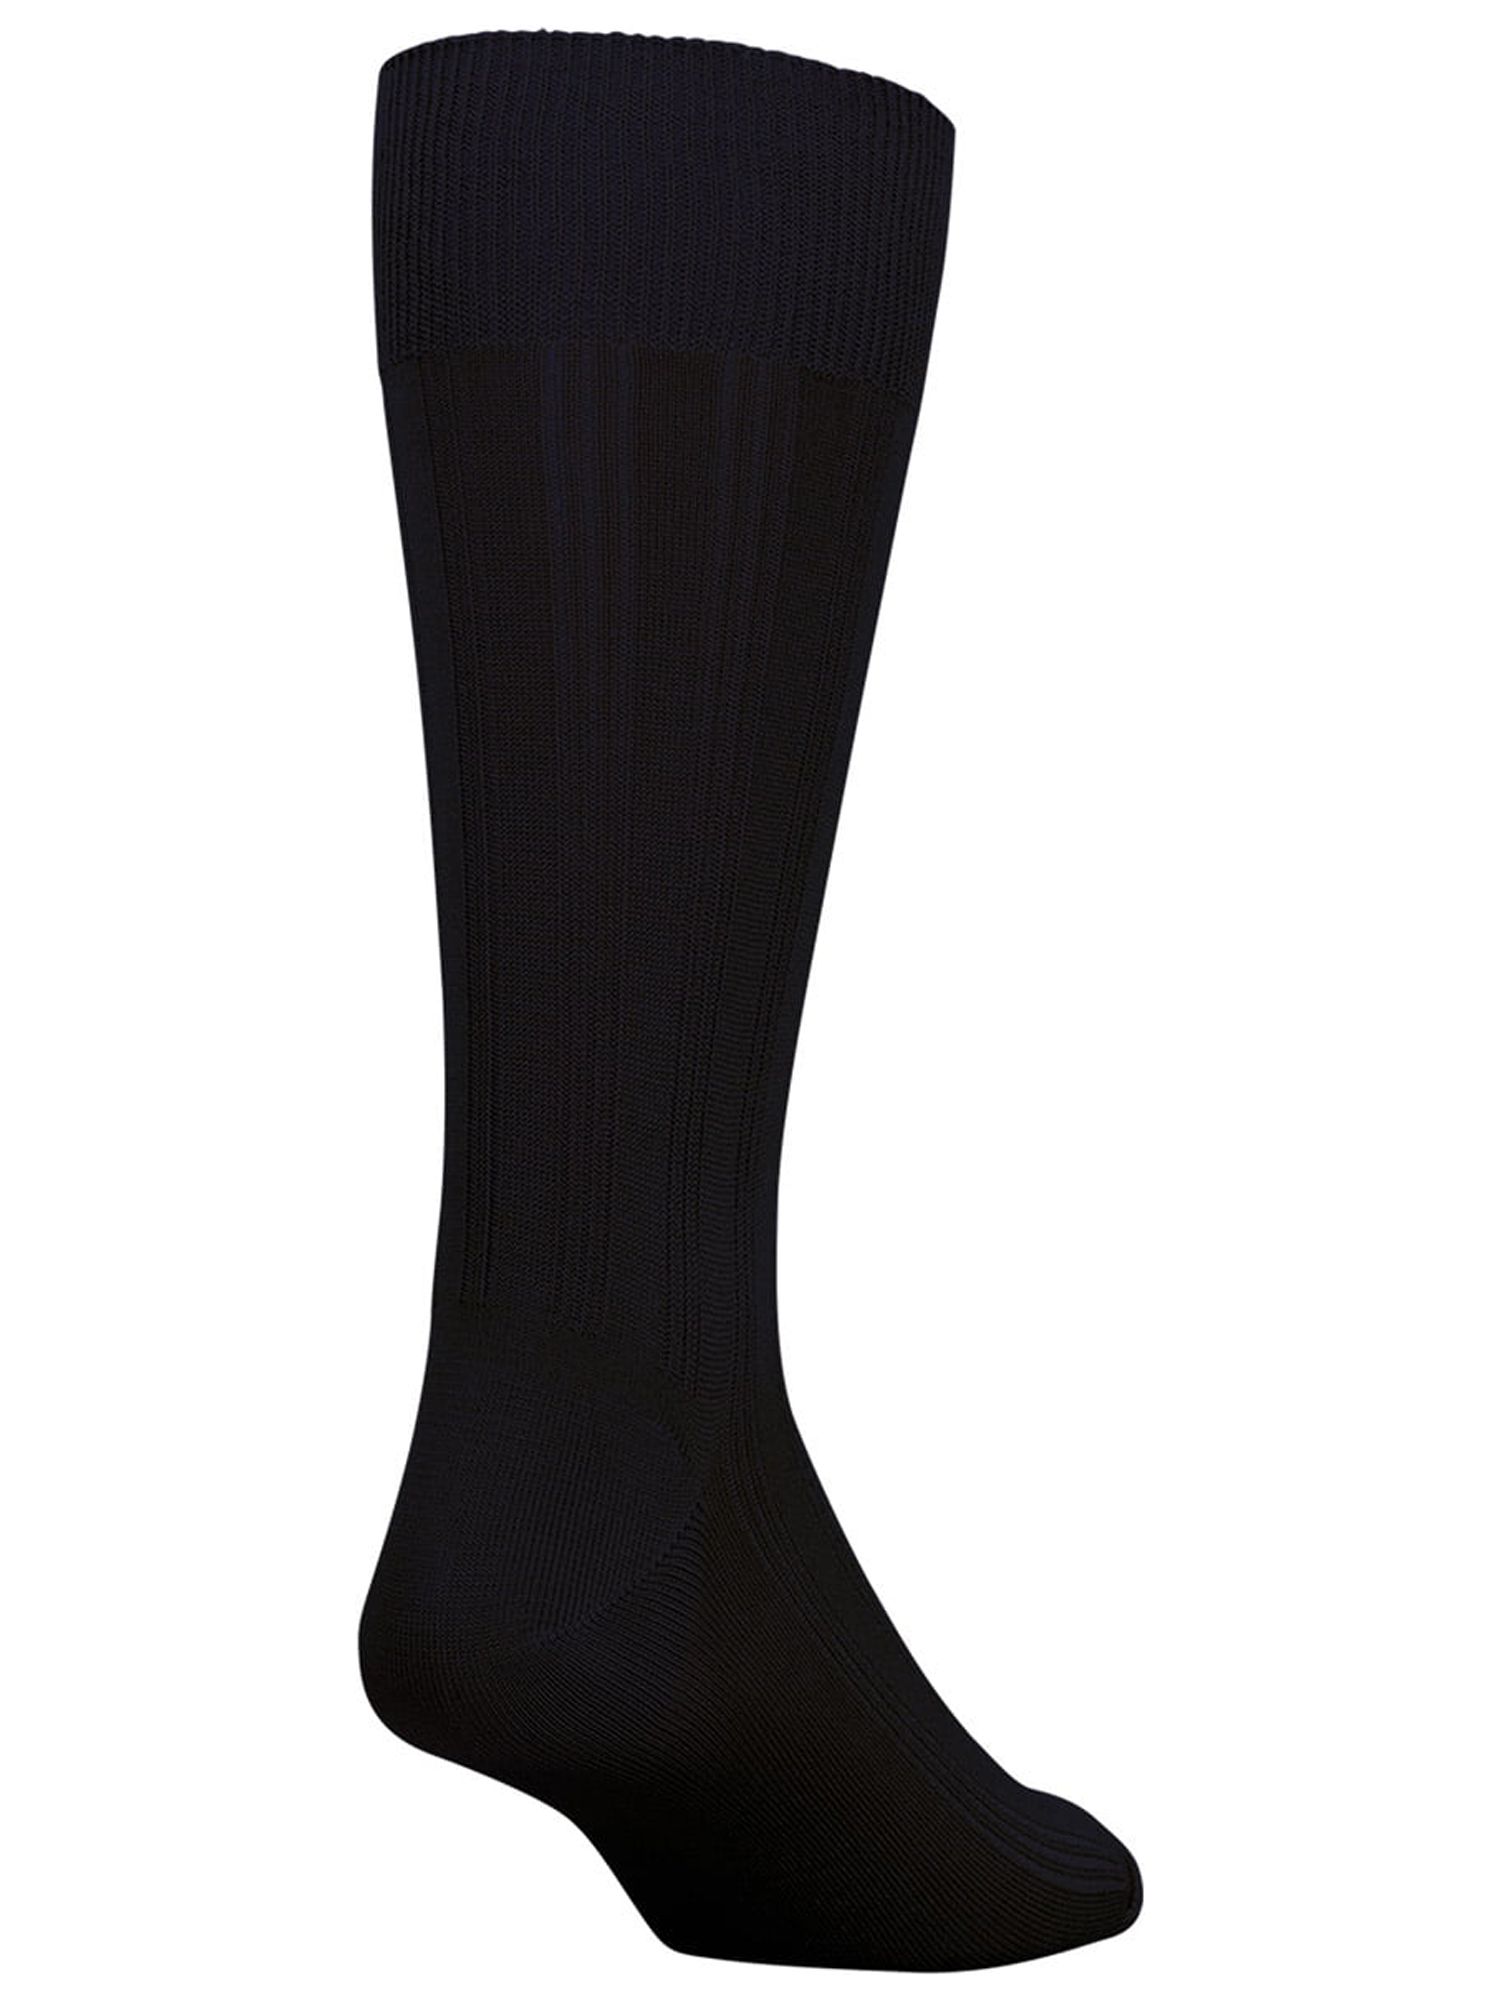 Gold Toe Adult Men's Hampton Reinforced Toe Dress Socks, OS One Size, 3 Pack - image 3 of 3